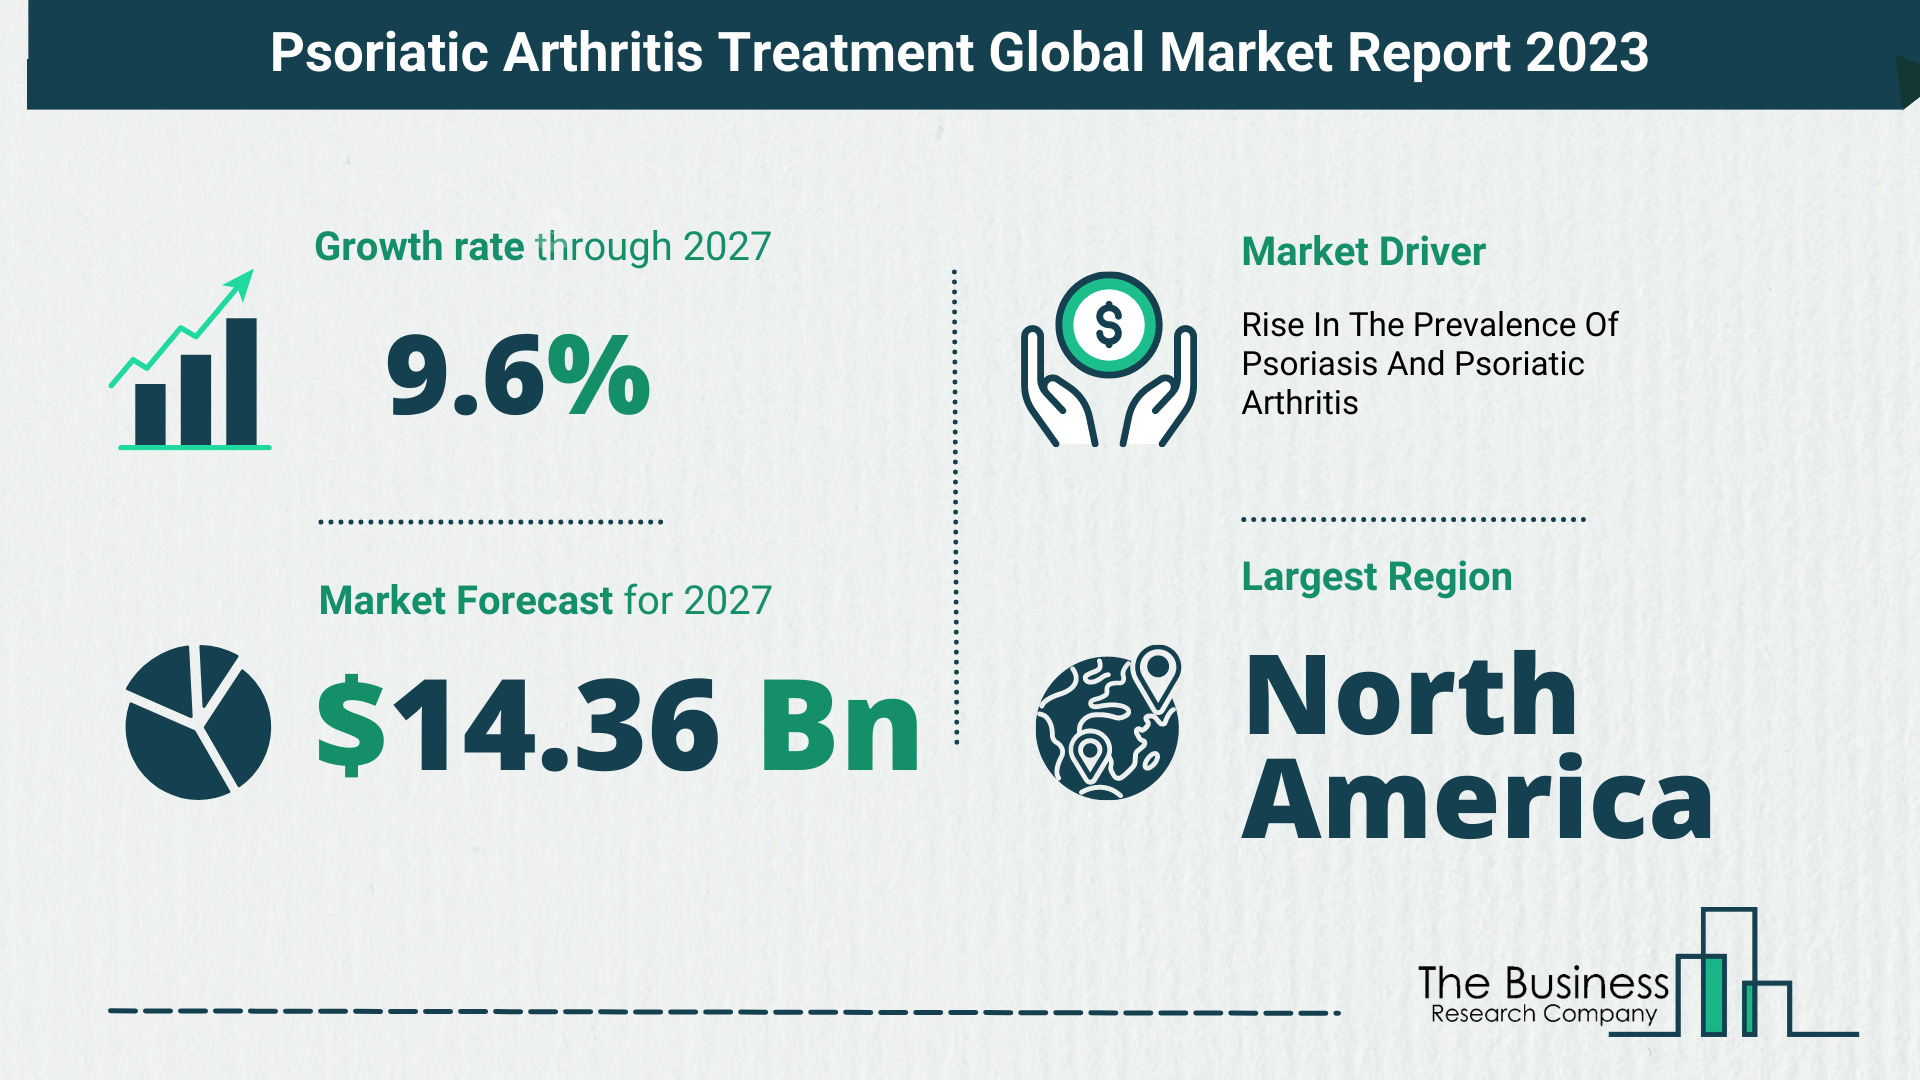 Global Psoriatic Arthritis Treatment Market